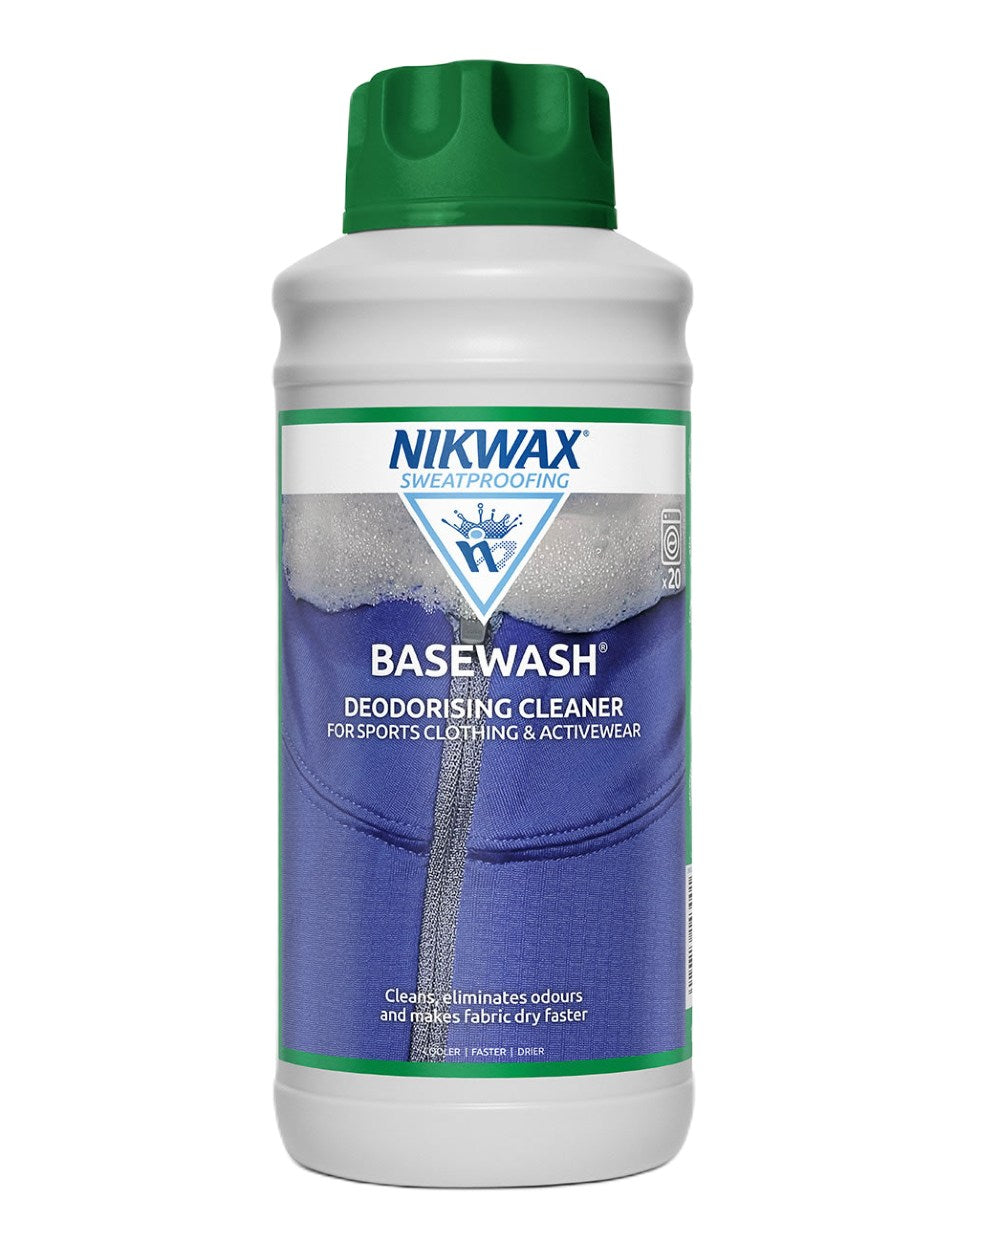 Nikwax Basewash On A White Background